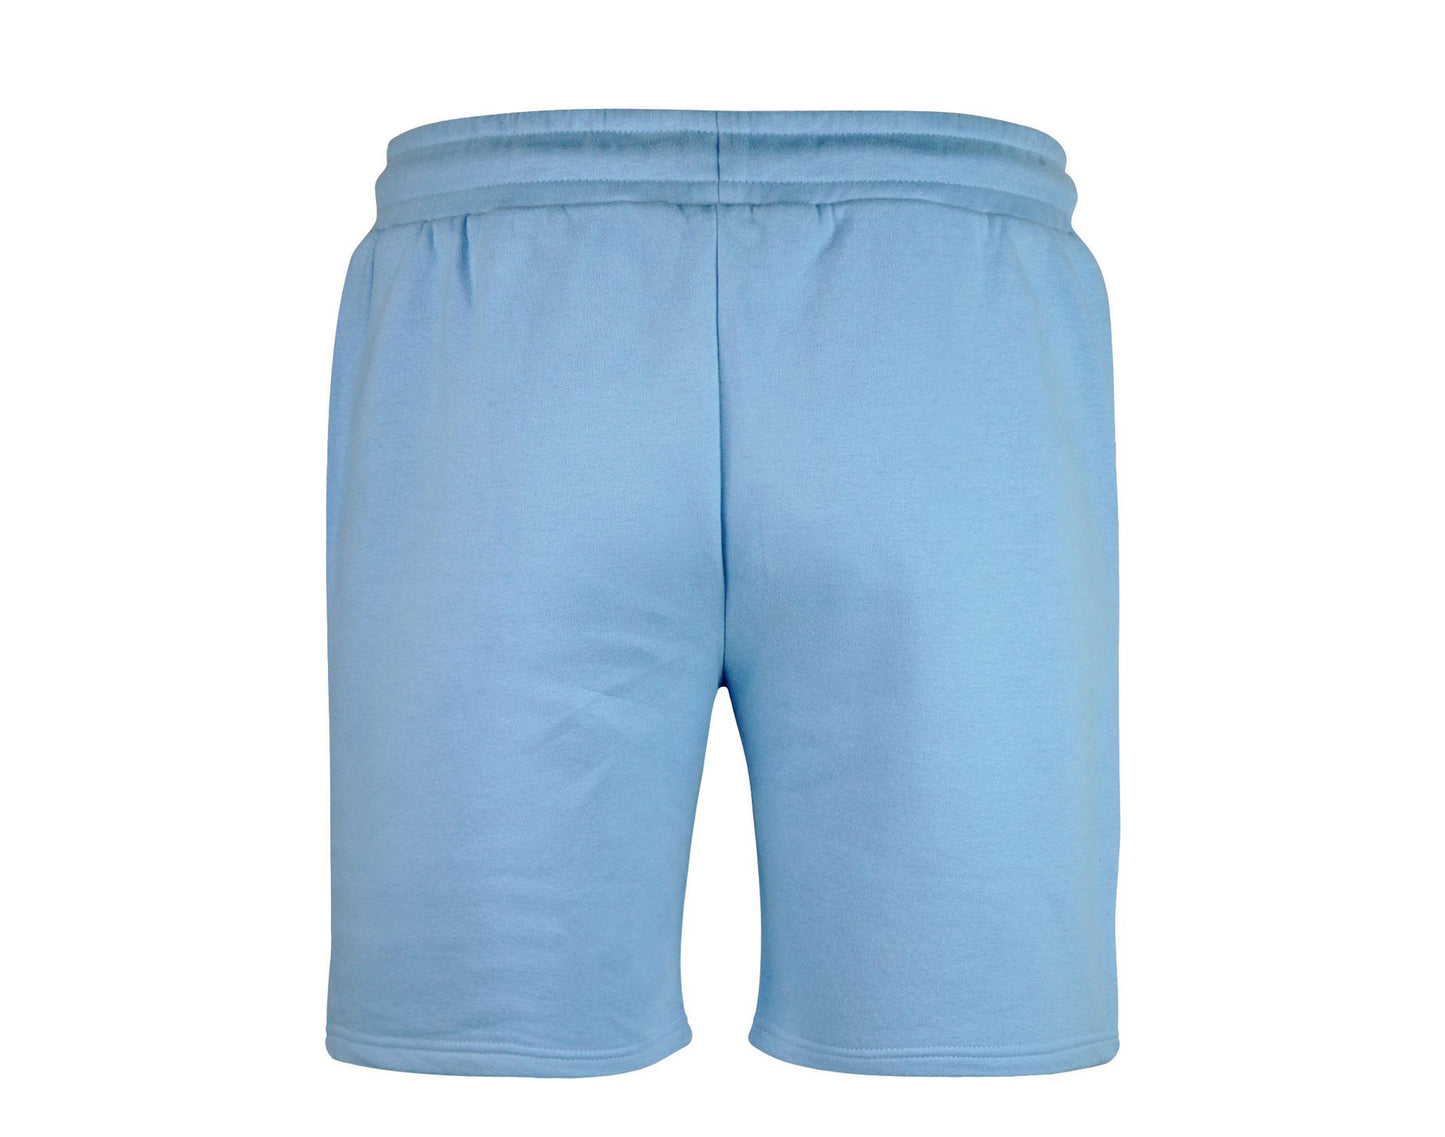 Ellesse Noli Light Blue Men's Shorts SHA01894-480